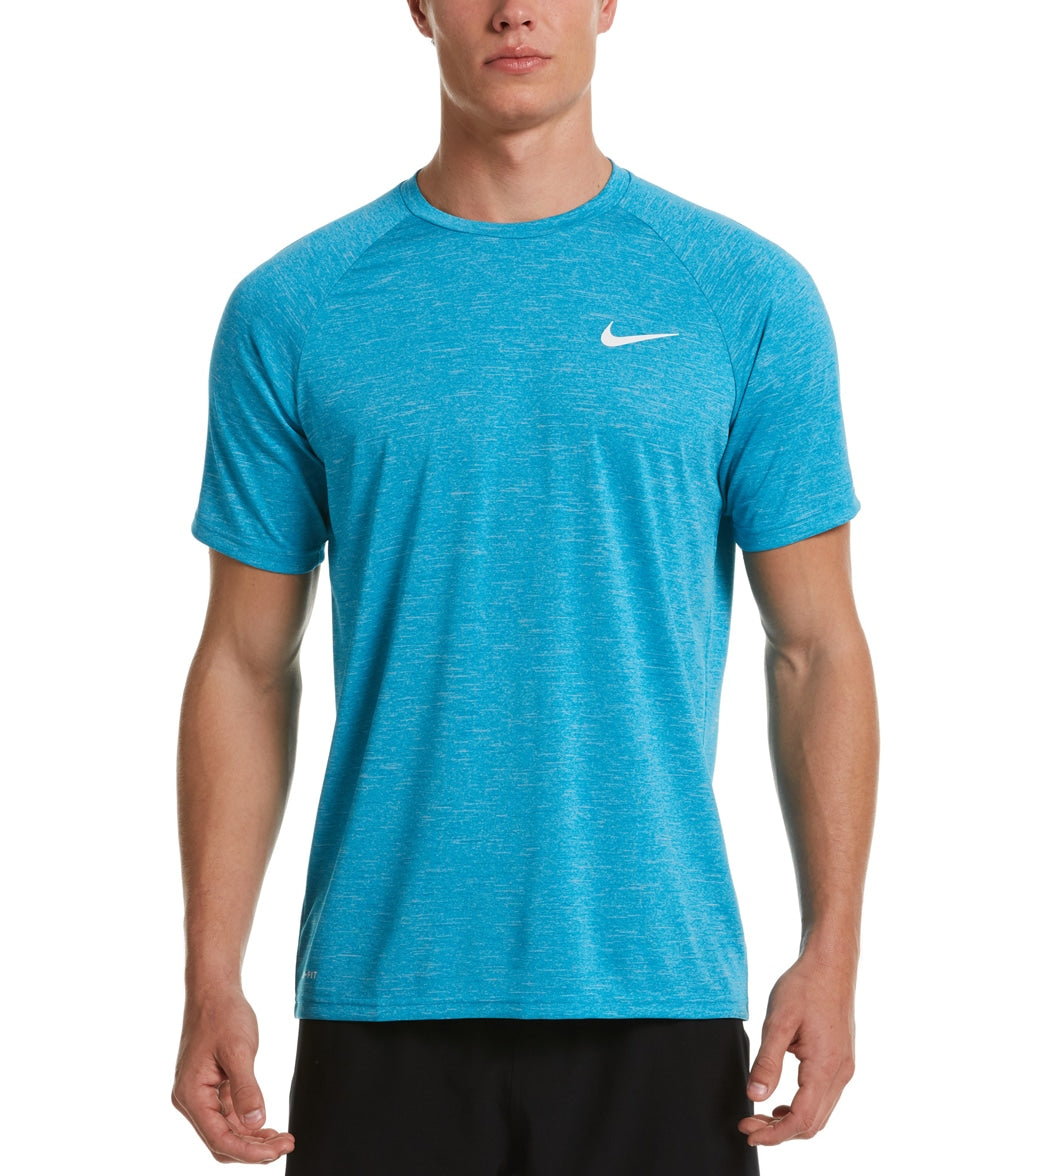 Nike Men's Heather Short Sleeve Hydroguard Shirt - Laser Blue Large Polyester - Swimoutlet.com